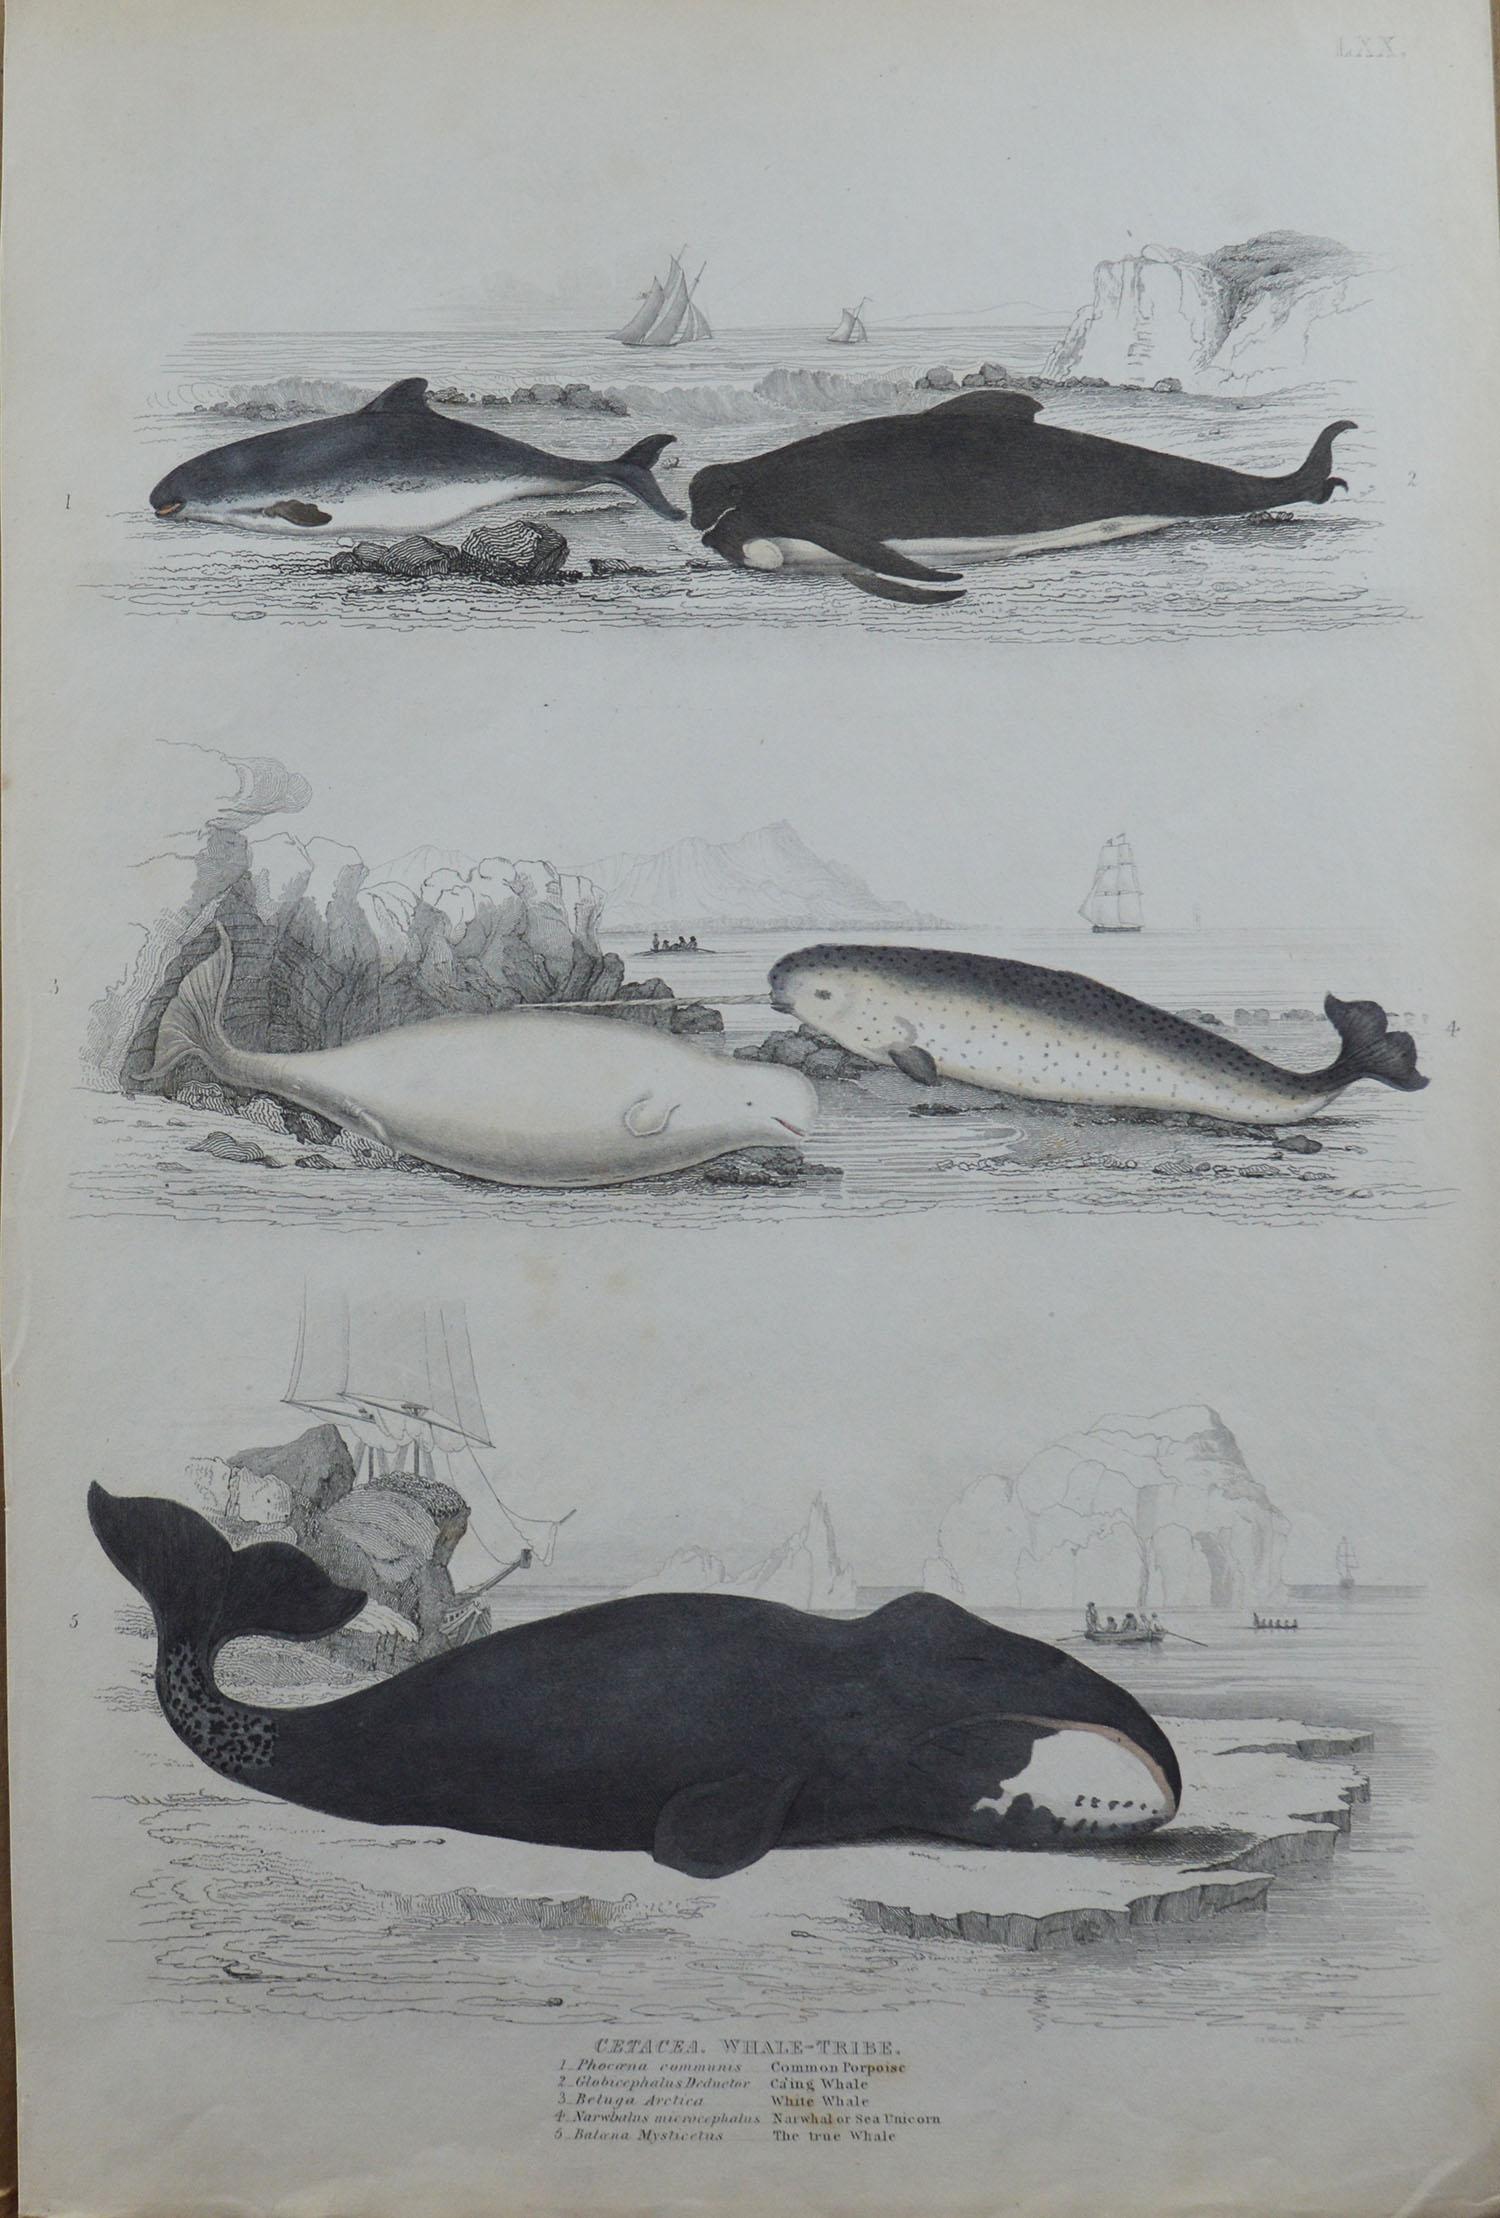 Folk Art Set of 5 Large Original Antique Prints with a Marine, Seaside Theme, 1830s